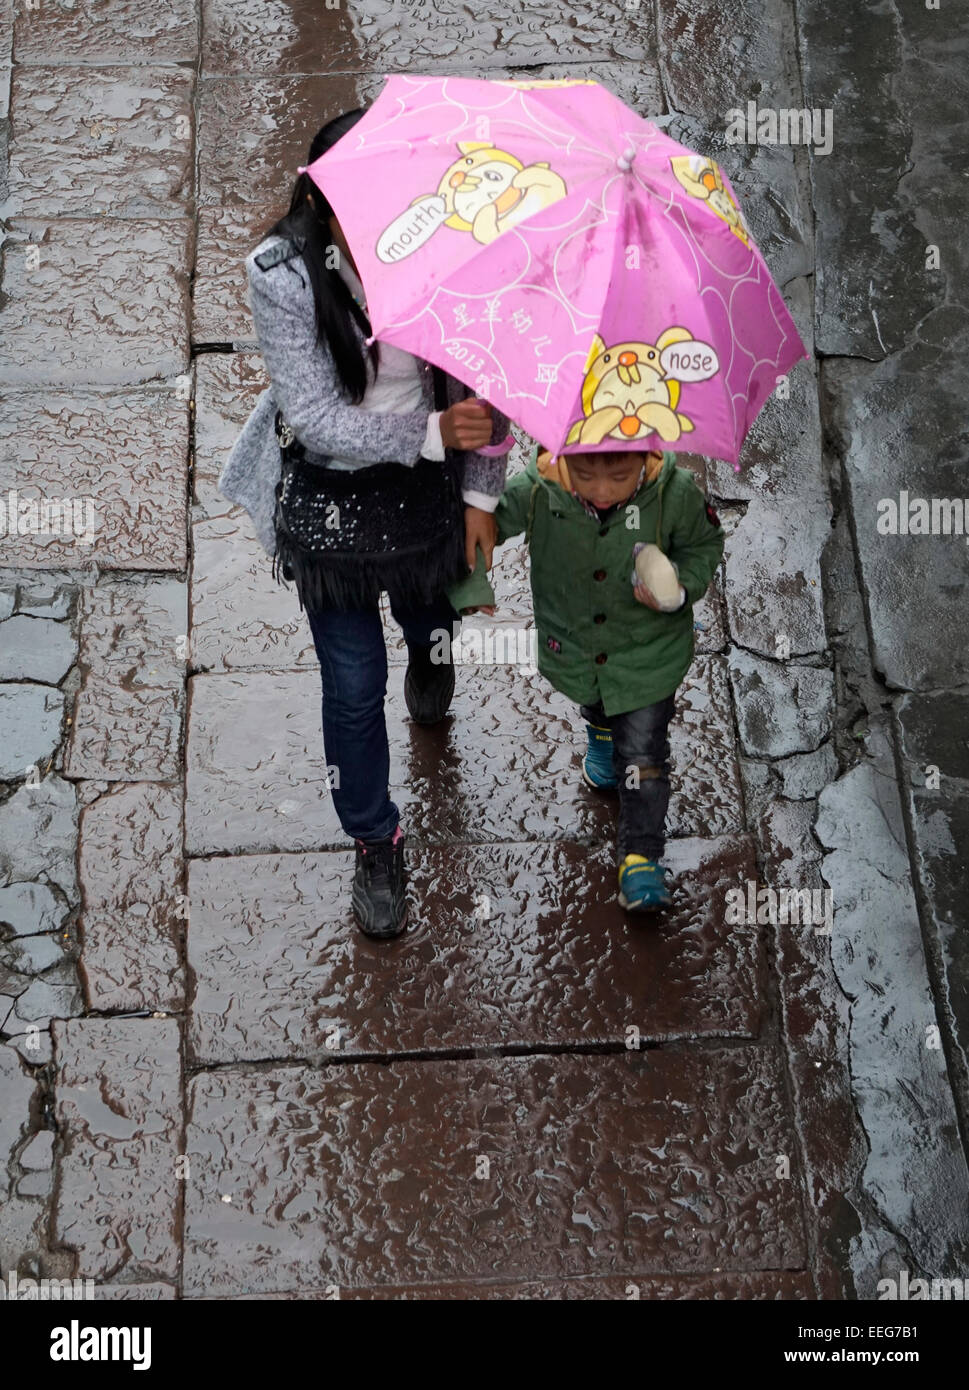 People walking with umbrella in the rain, stone sidewalk, wet, reflection. Stock Photo